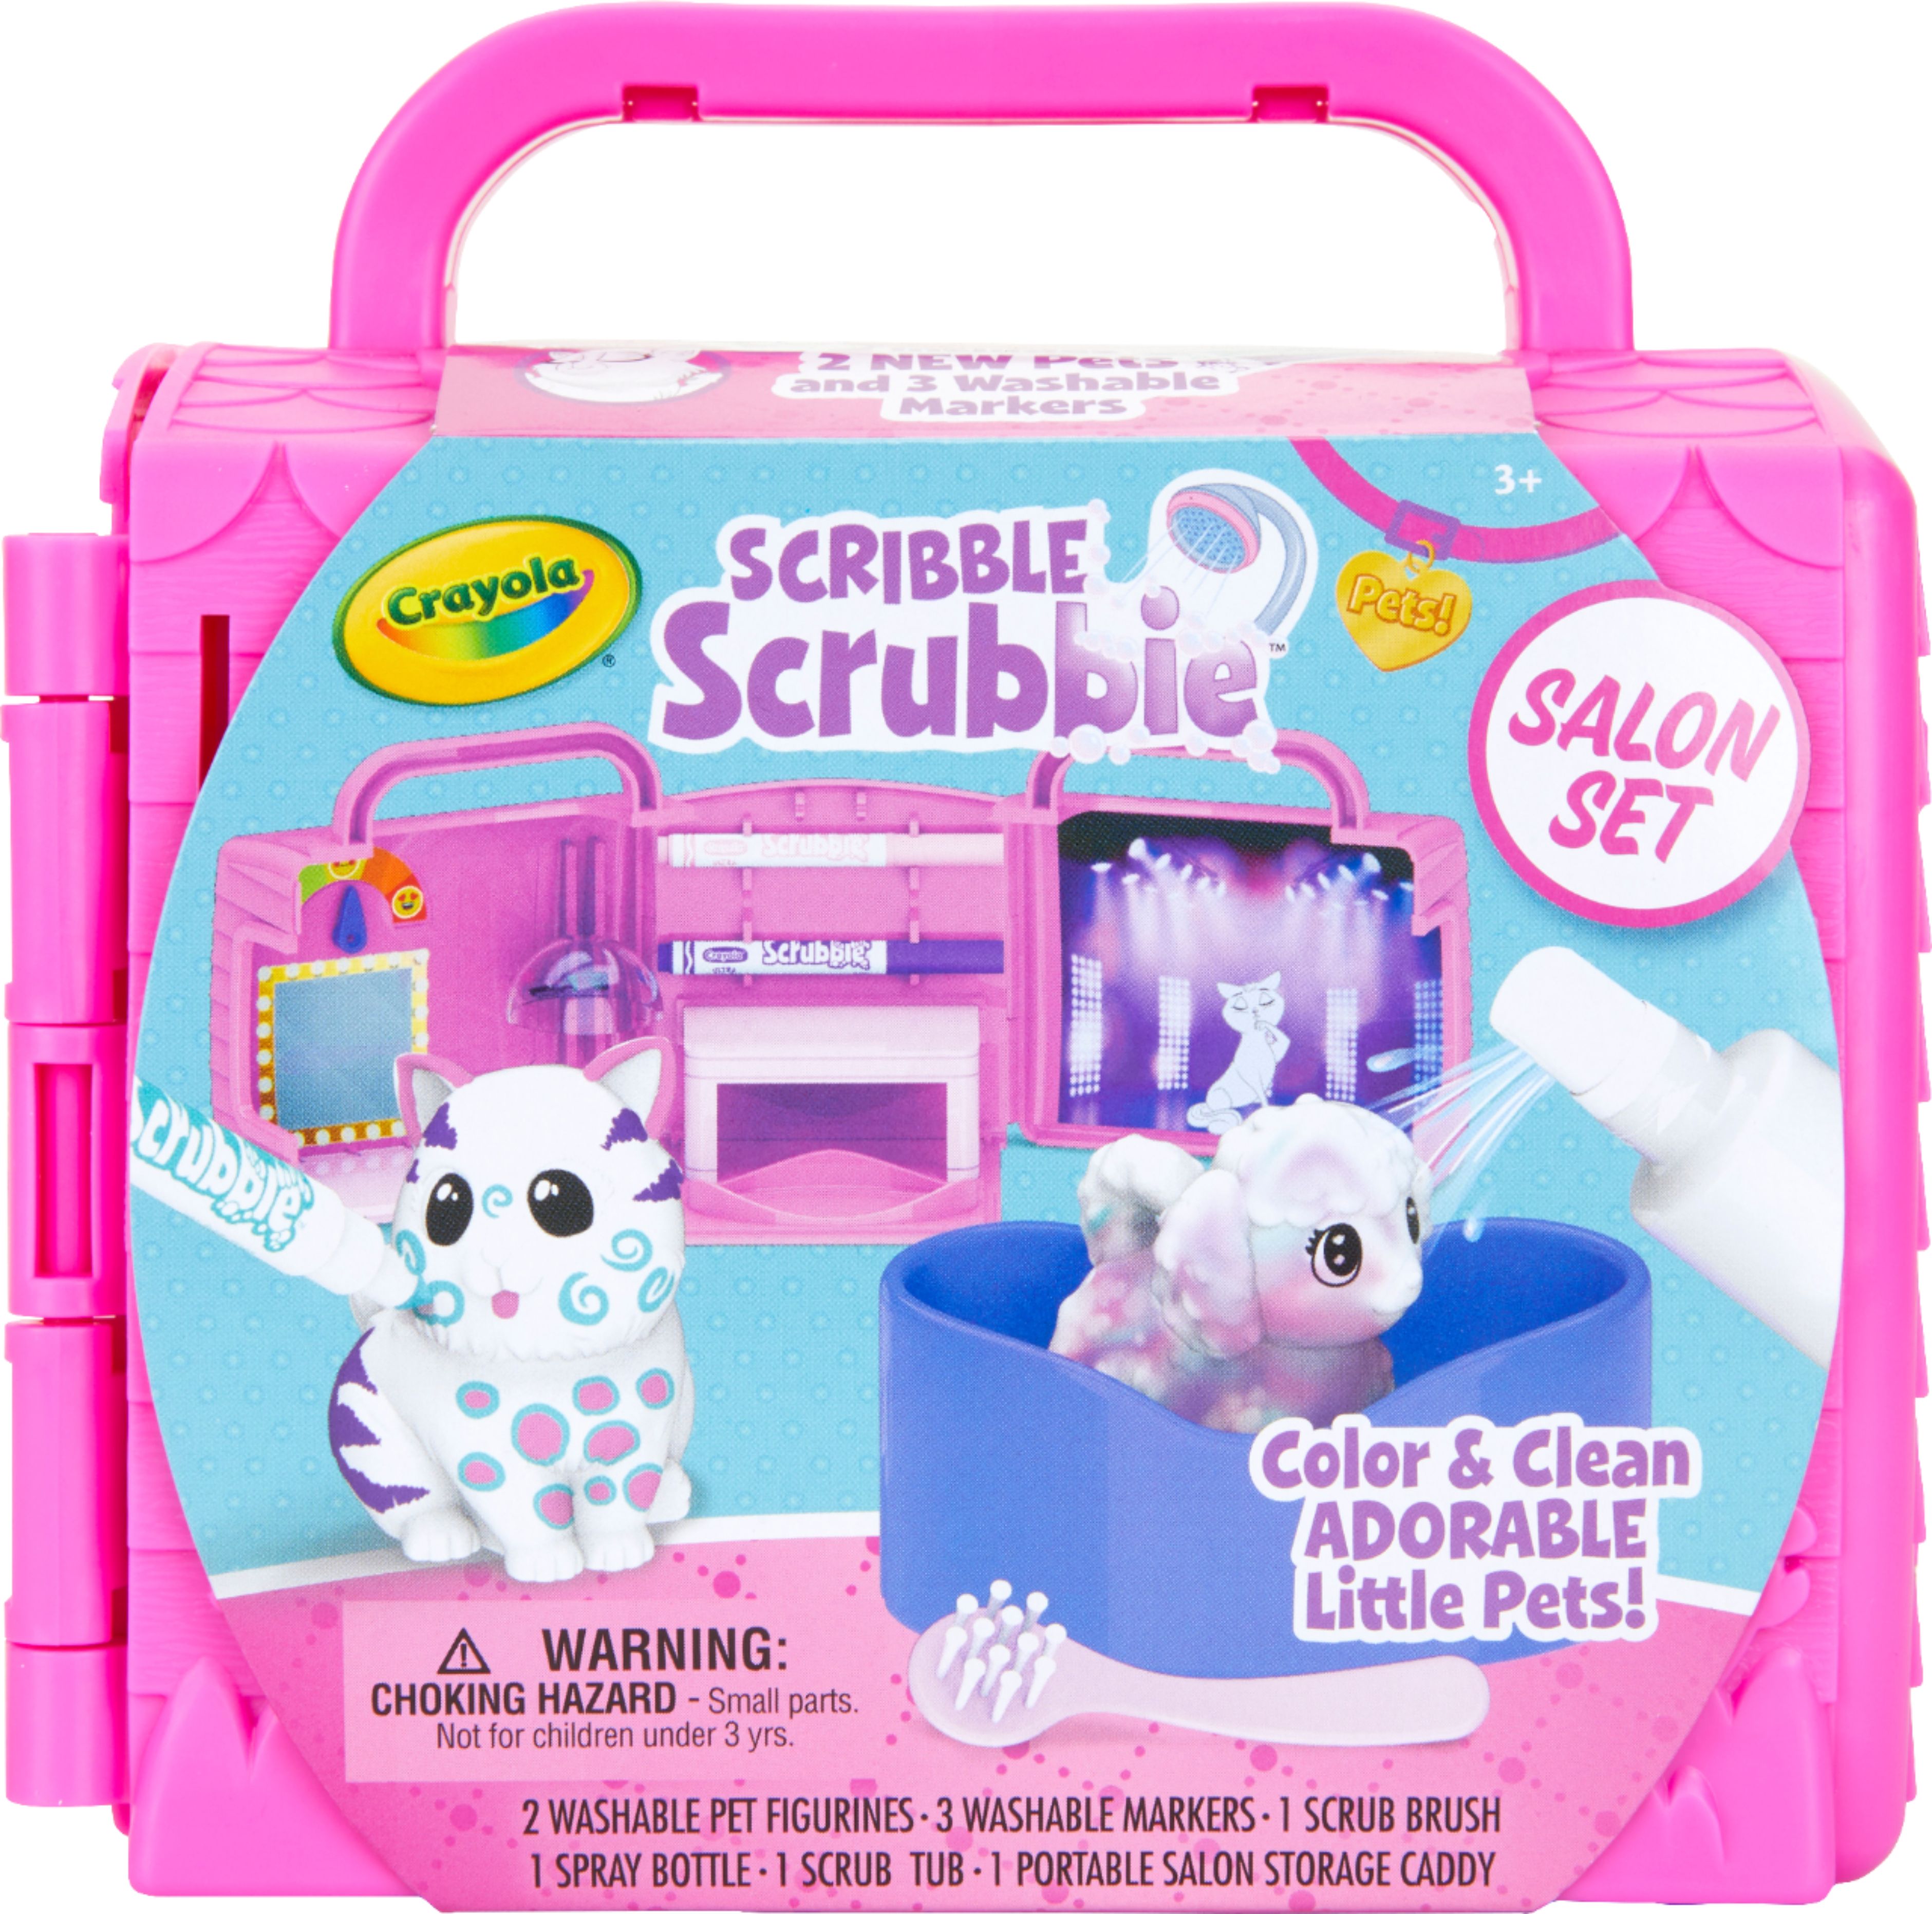 Crayola Scribble Scrubbie Pets Grooming Truck Coloring Set - Arts & Crafts  - Hallmark